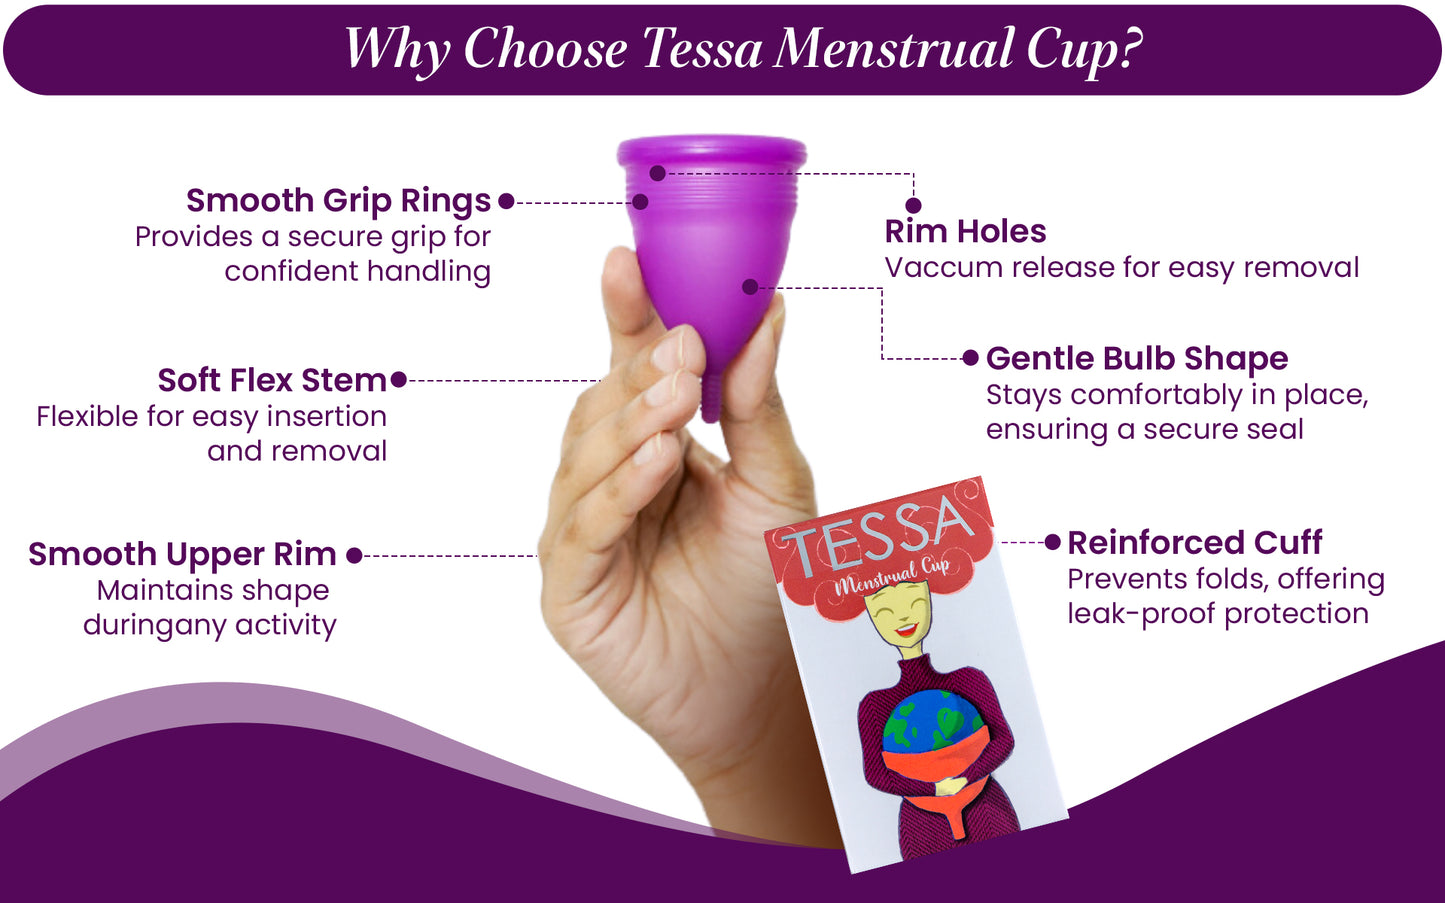 Tessa Menstrual Cup - Large